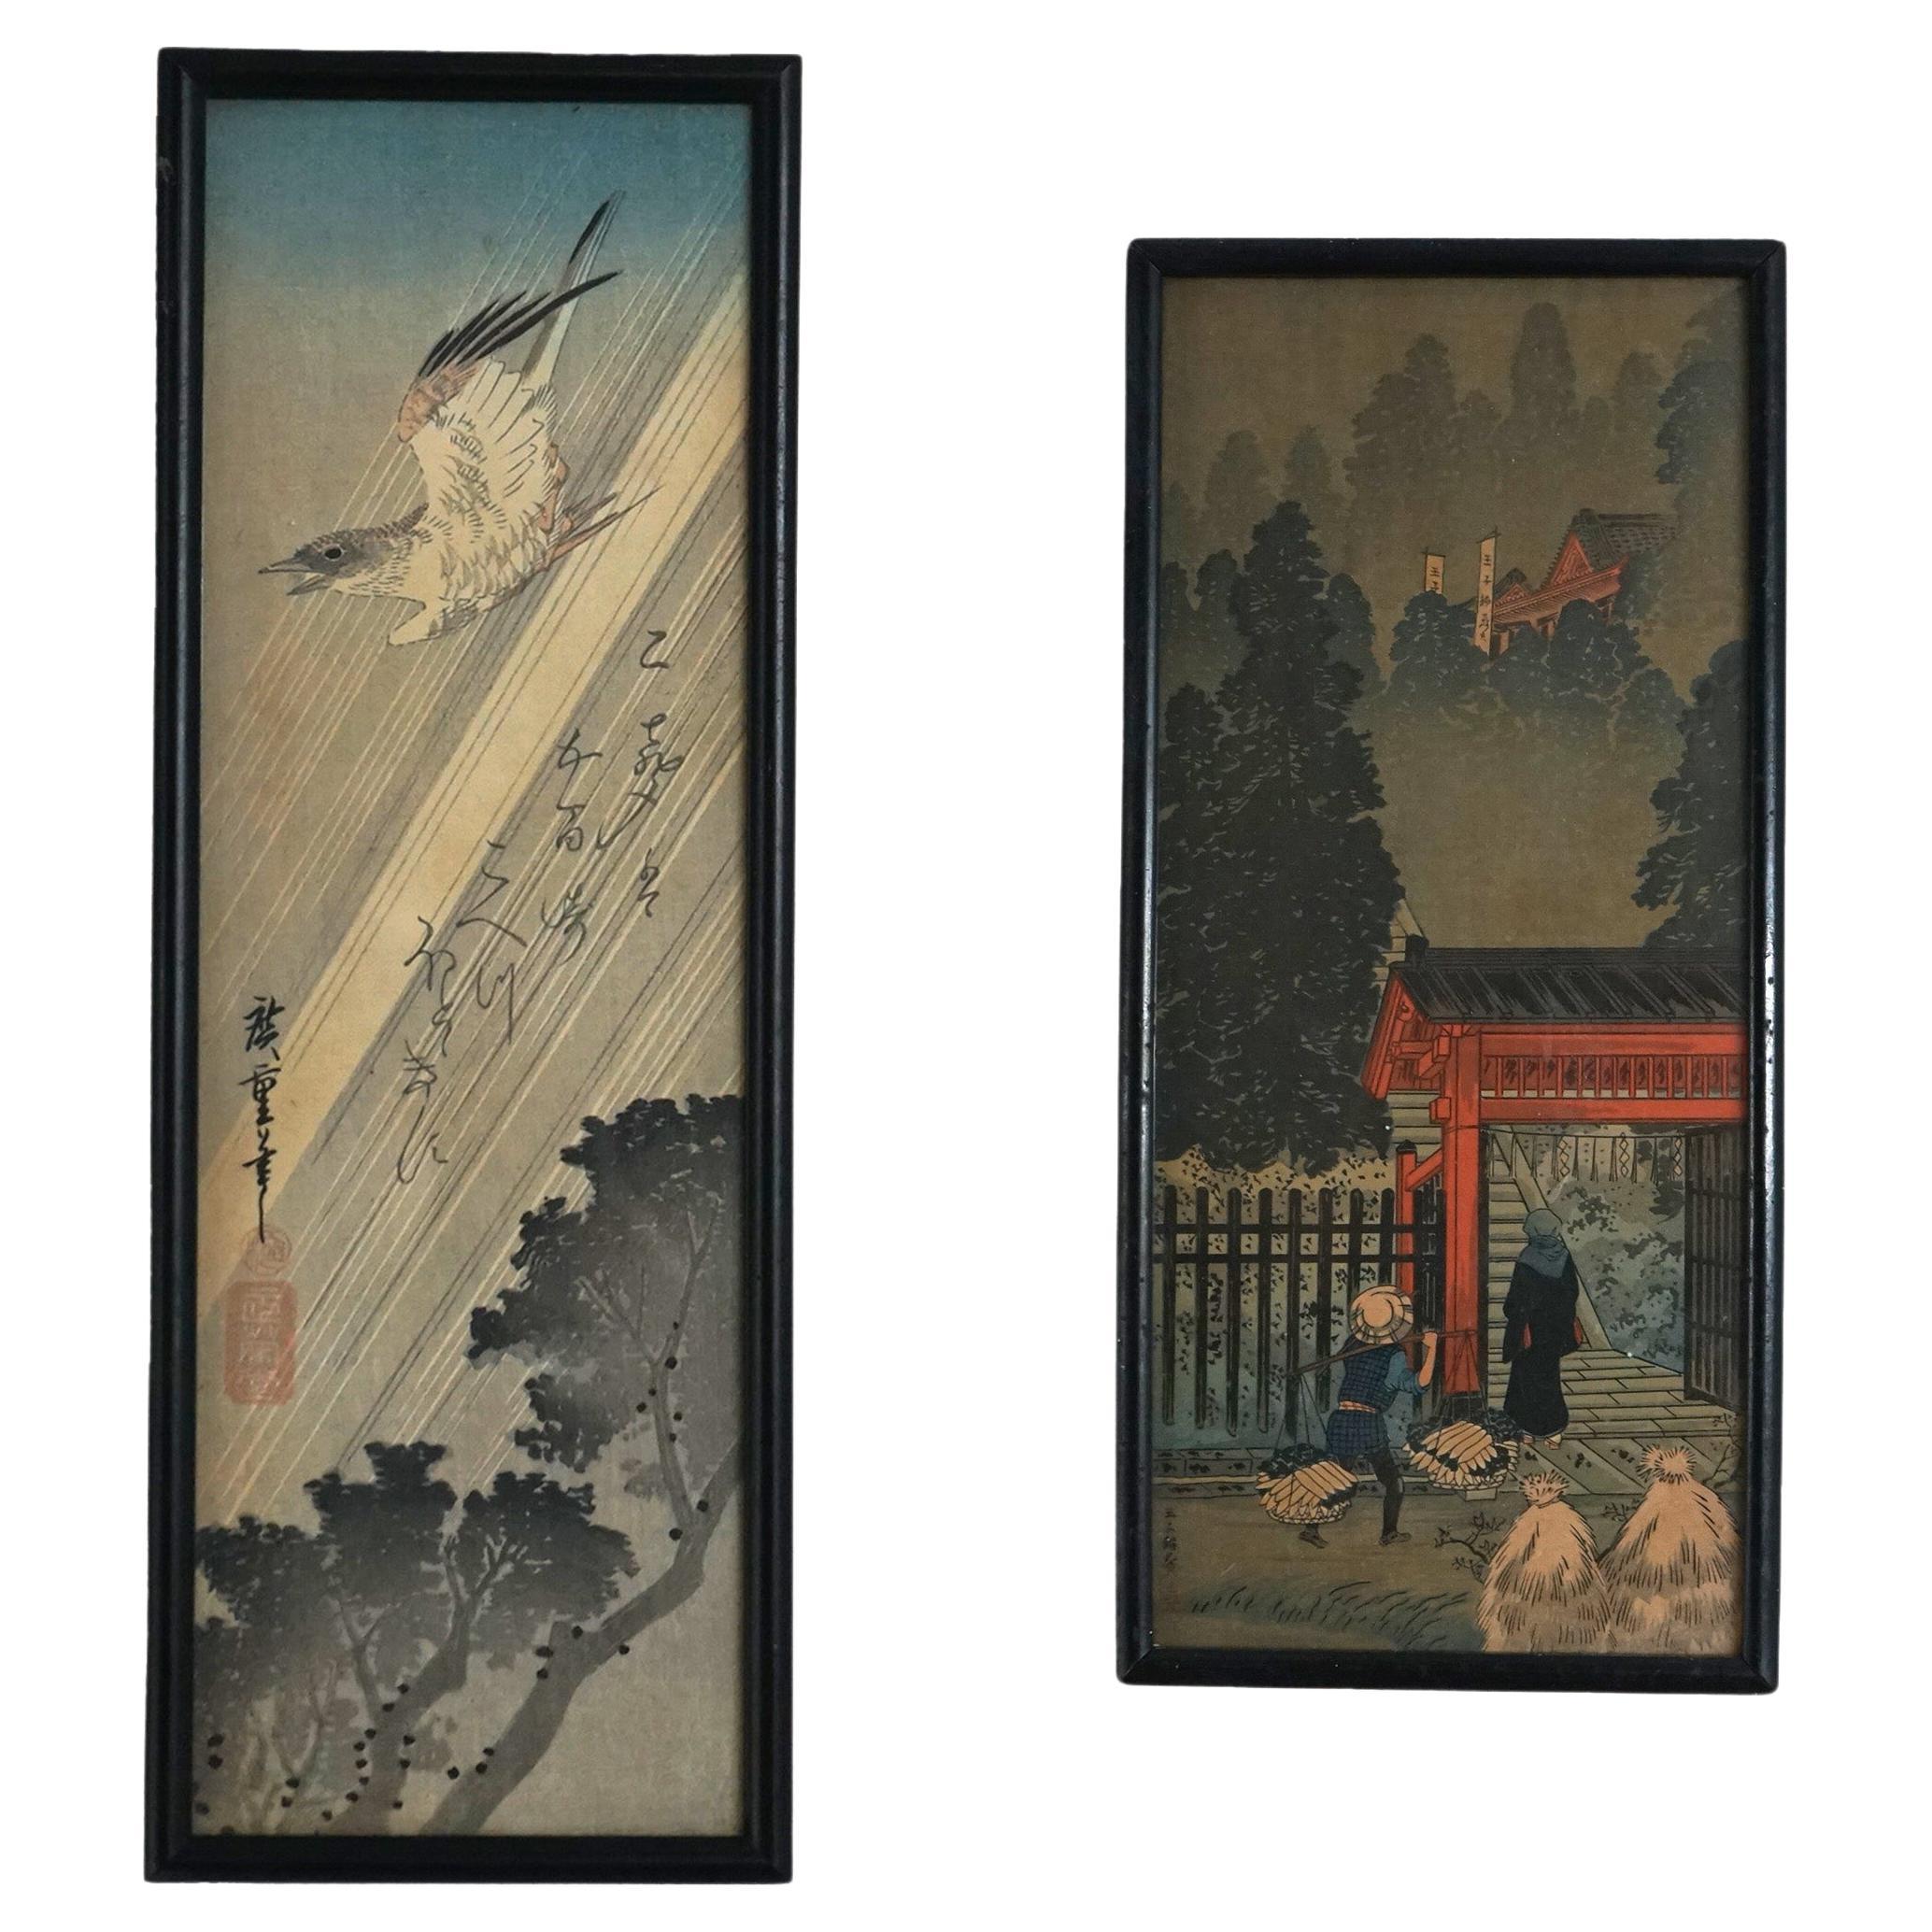 Japanese Woodblock Prints by Utagawa Hiroshige and Hiroaki Takahashi 20thC For Sale